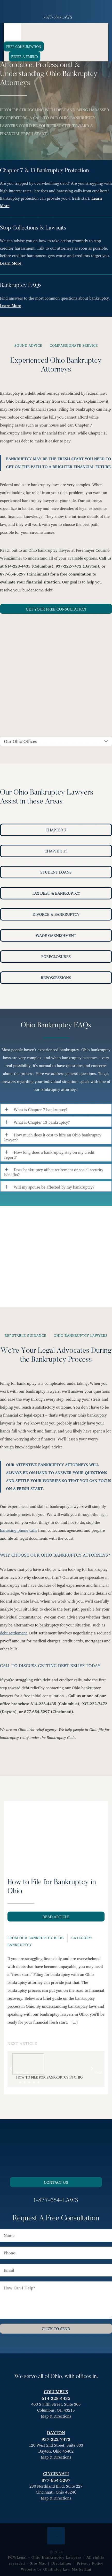 Fesenmyer Cousino Weinzimmer - Columbus OH Lawyers